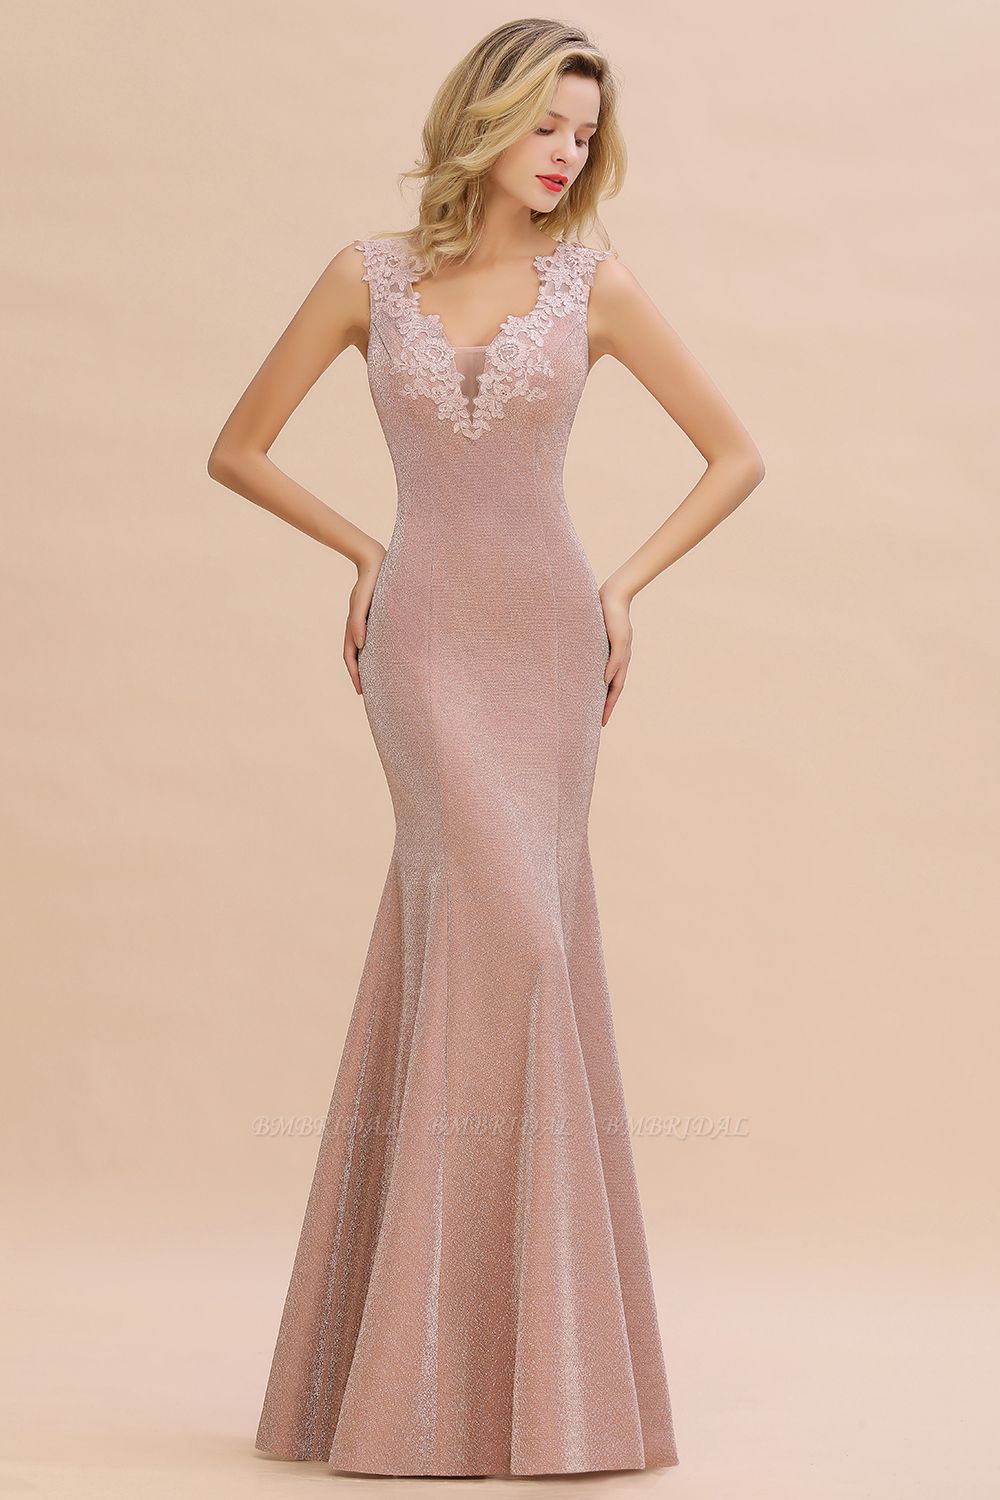 BMbridal Dusty Pink Shinning Langes Abendkleid Meerjungfrau mit Applikationen